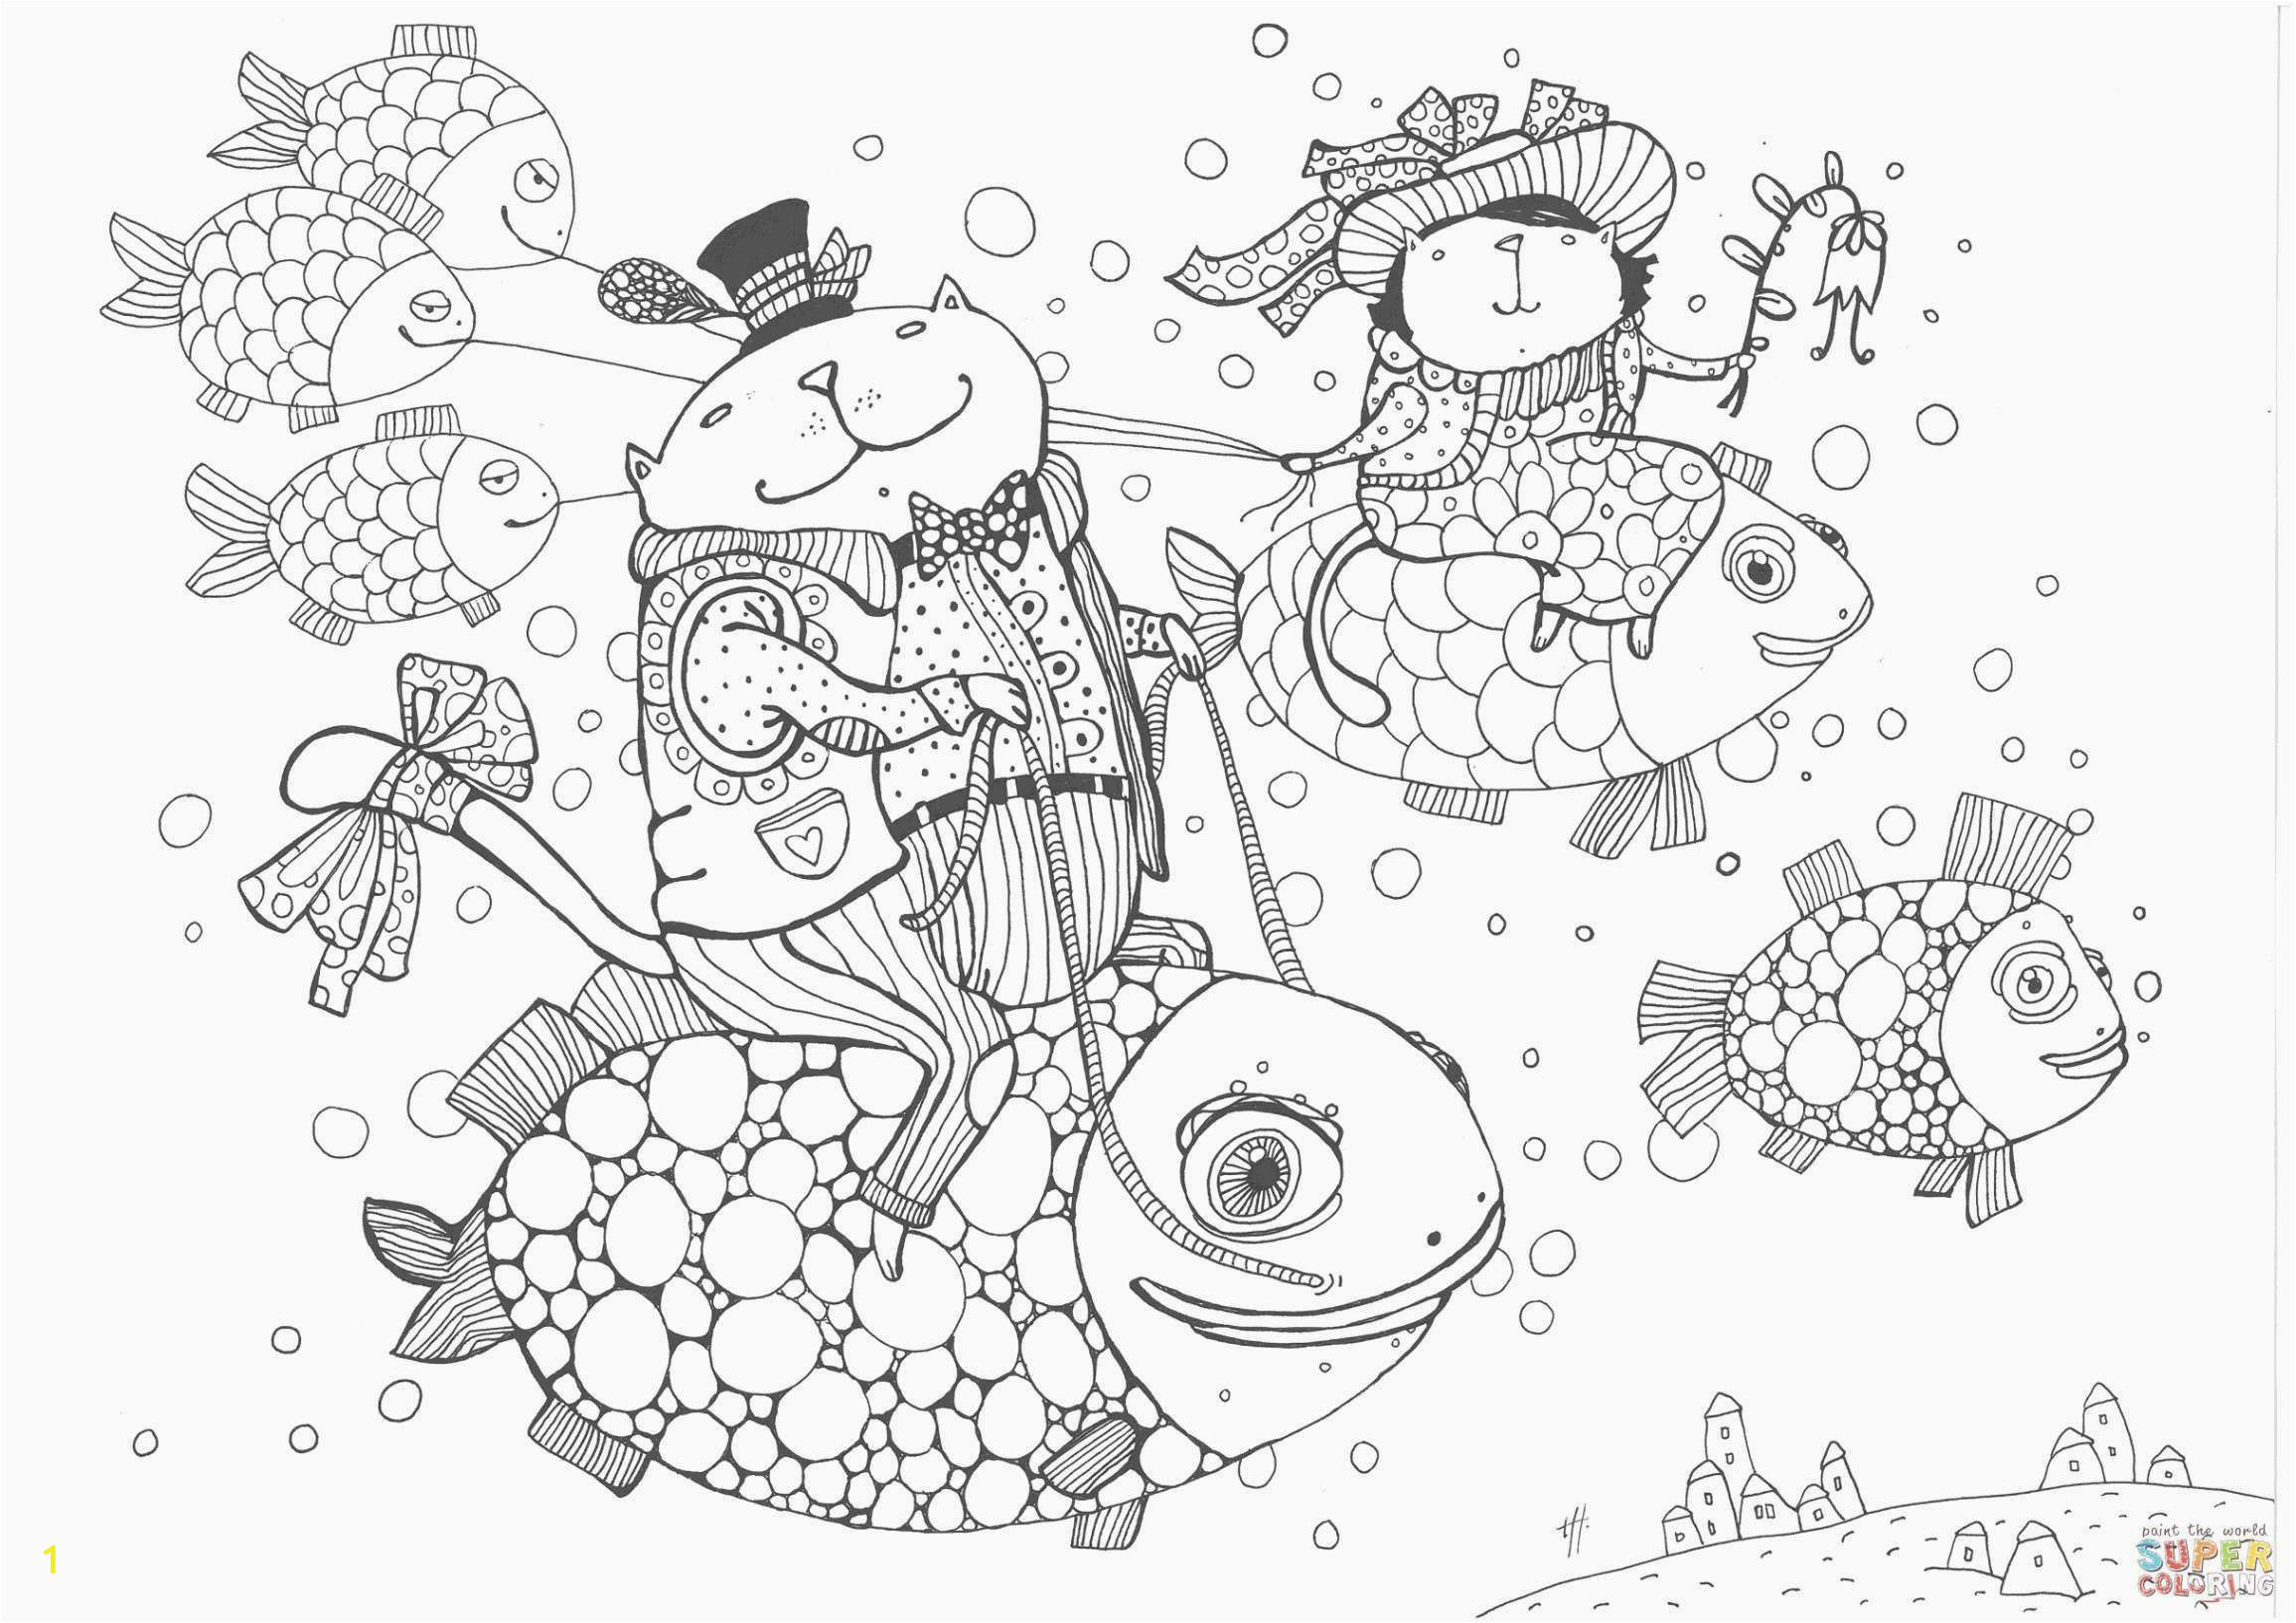 disney princess christmas coloring sheets new inspirational free pages of ideas stunning for villains adults colouring set vampirina book thomas kinkade rapunzel lion